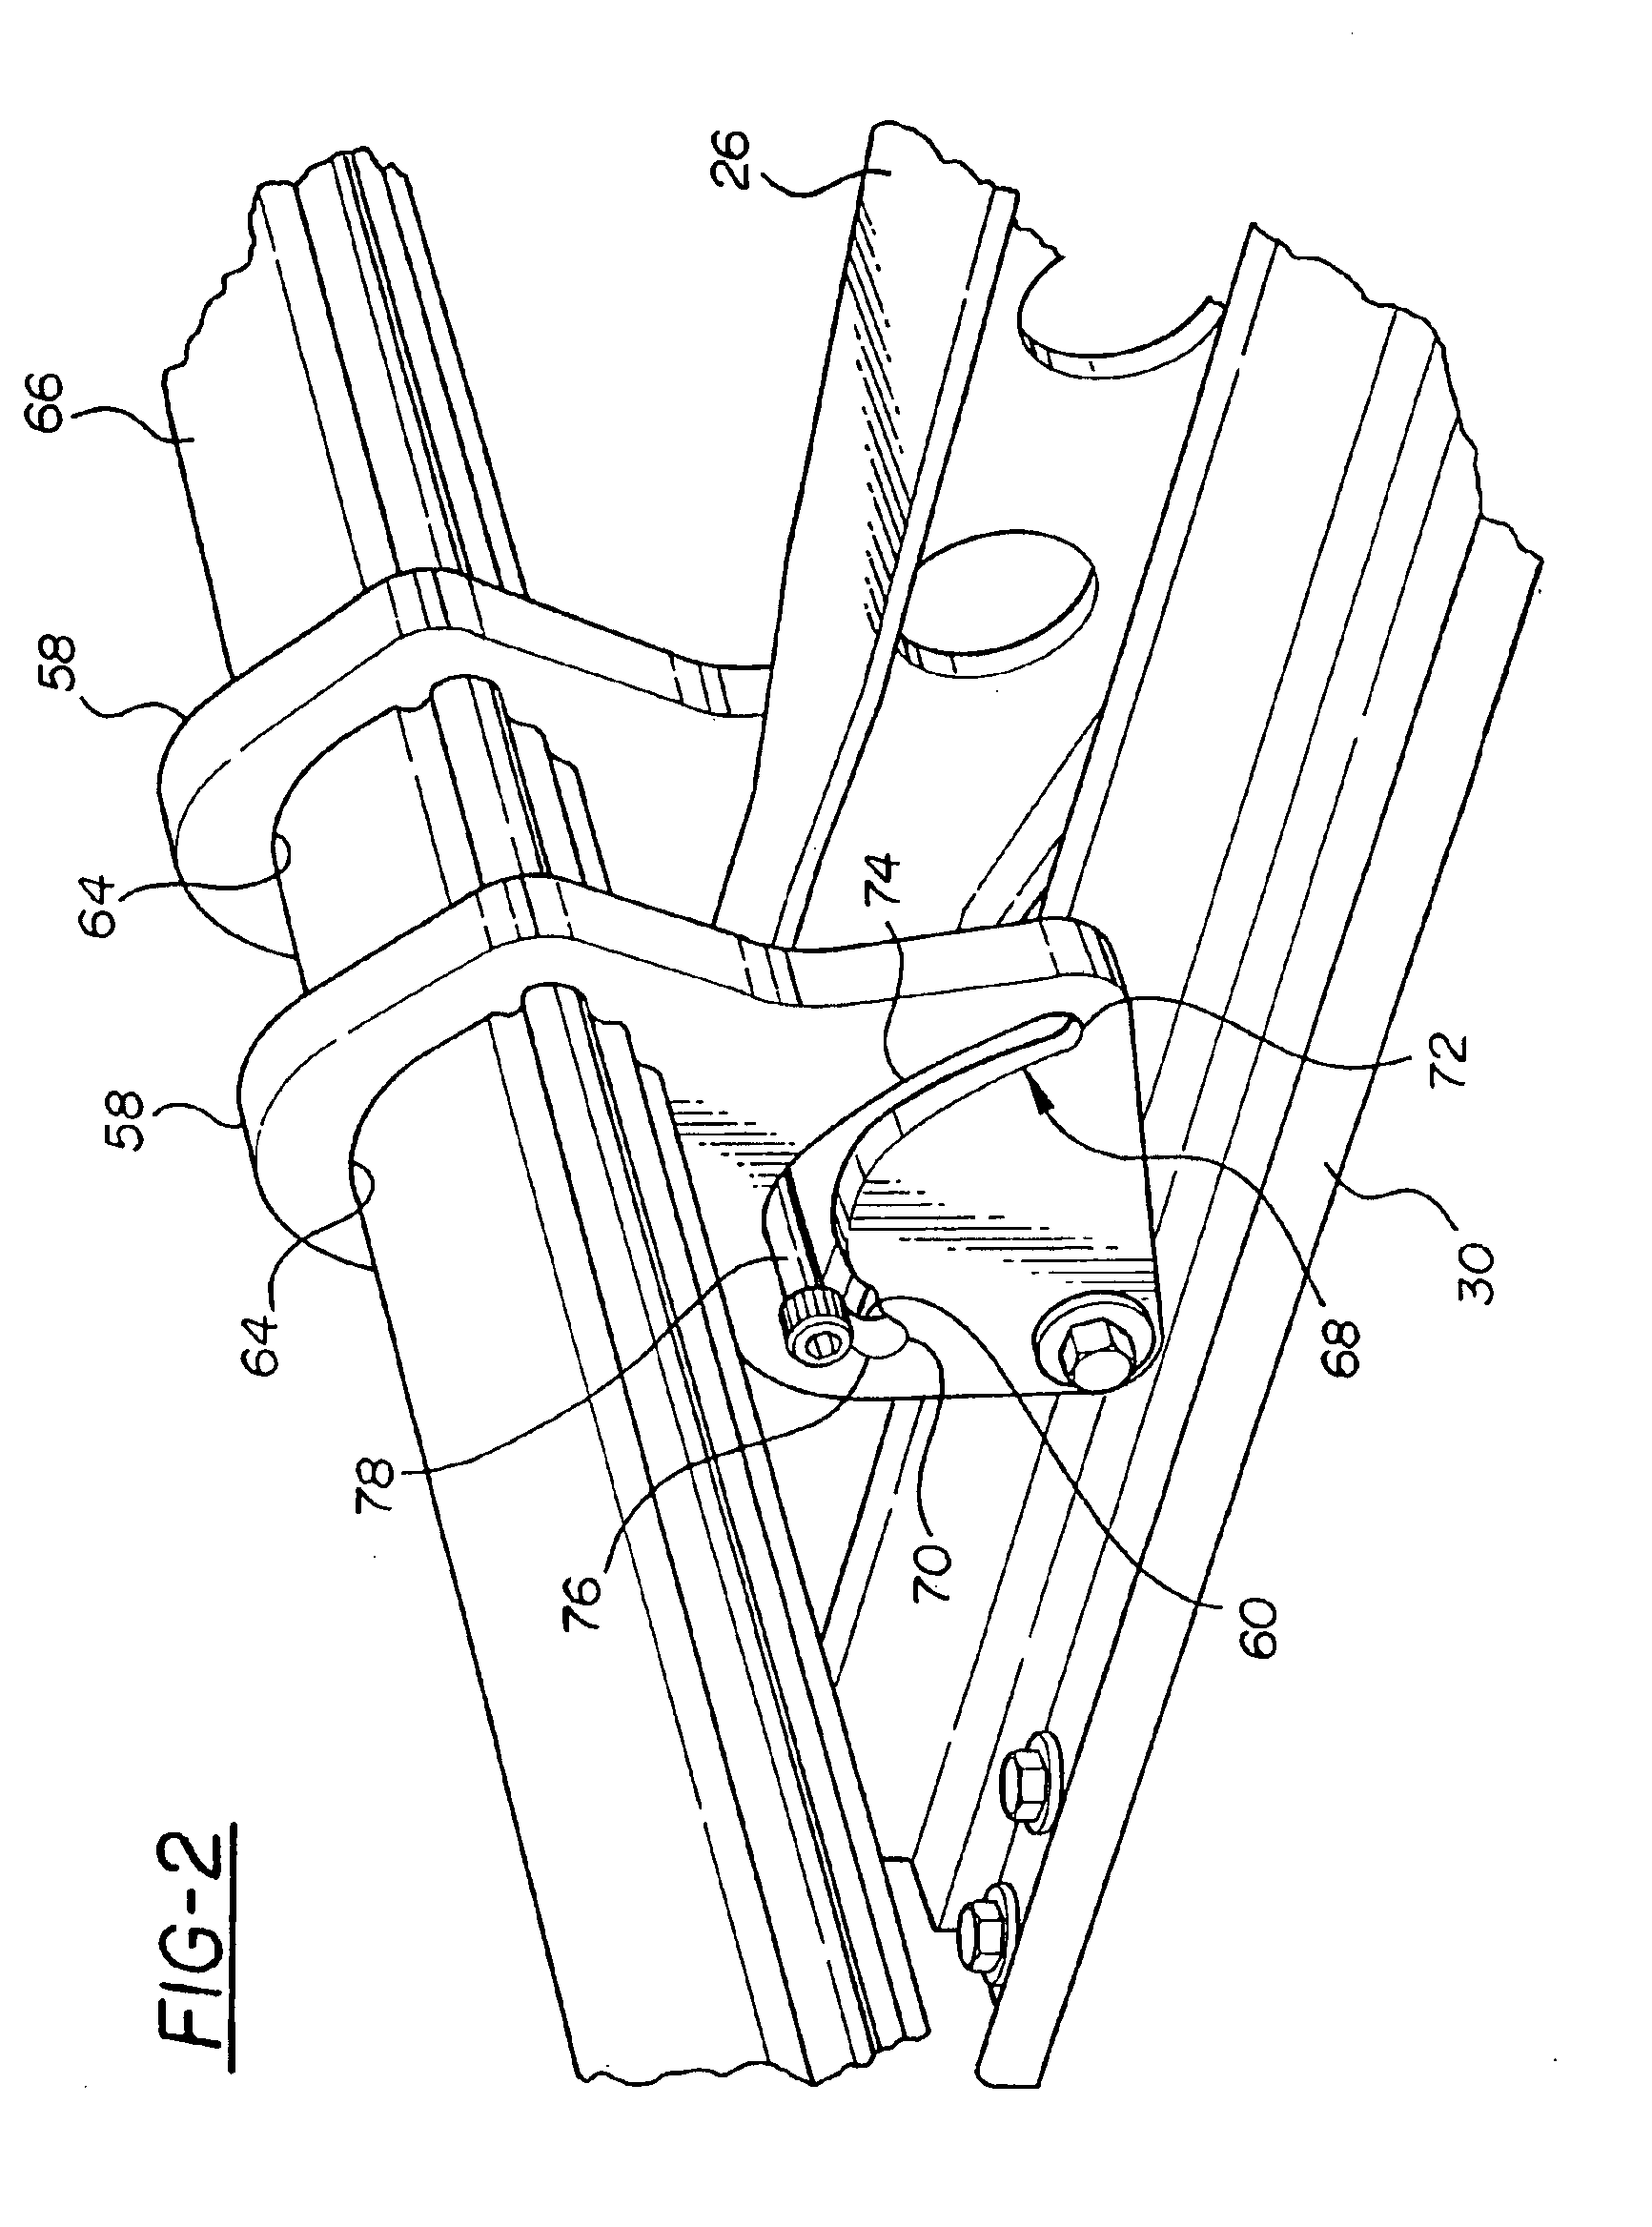 Device having pivotable wheel mechanism